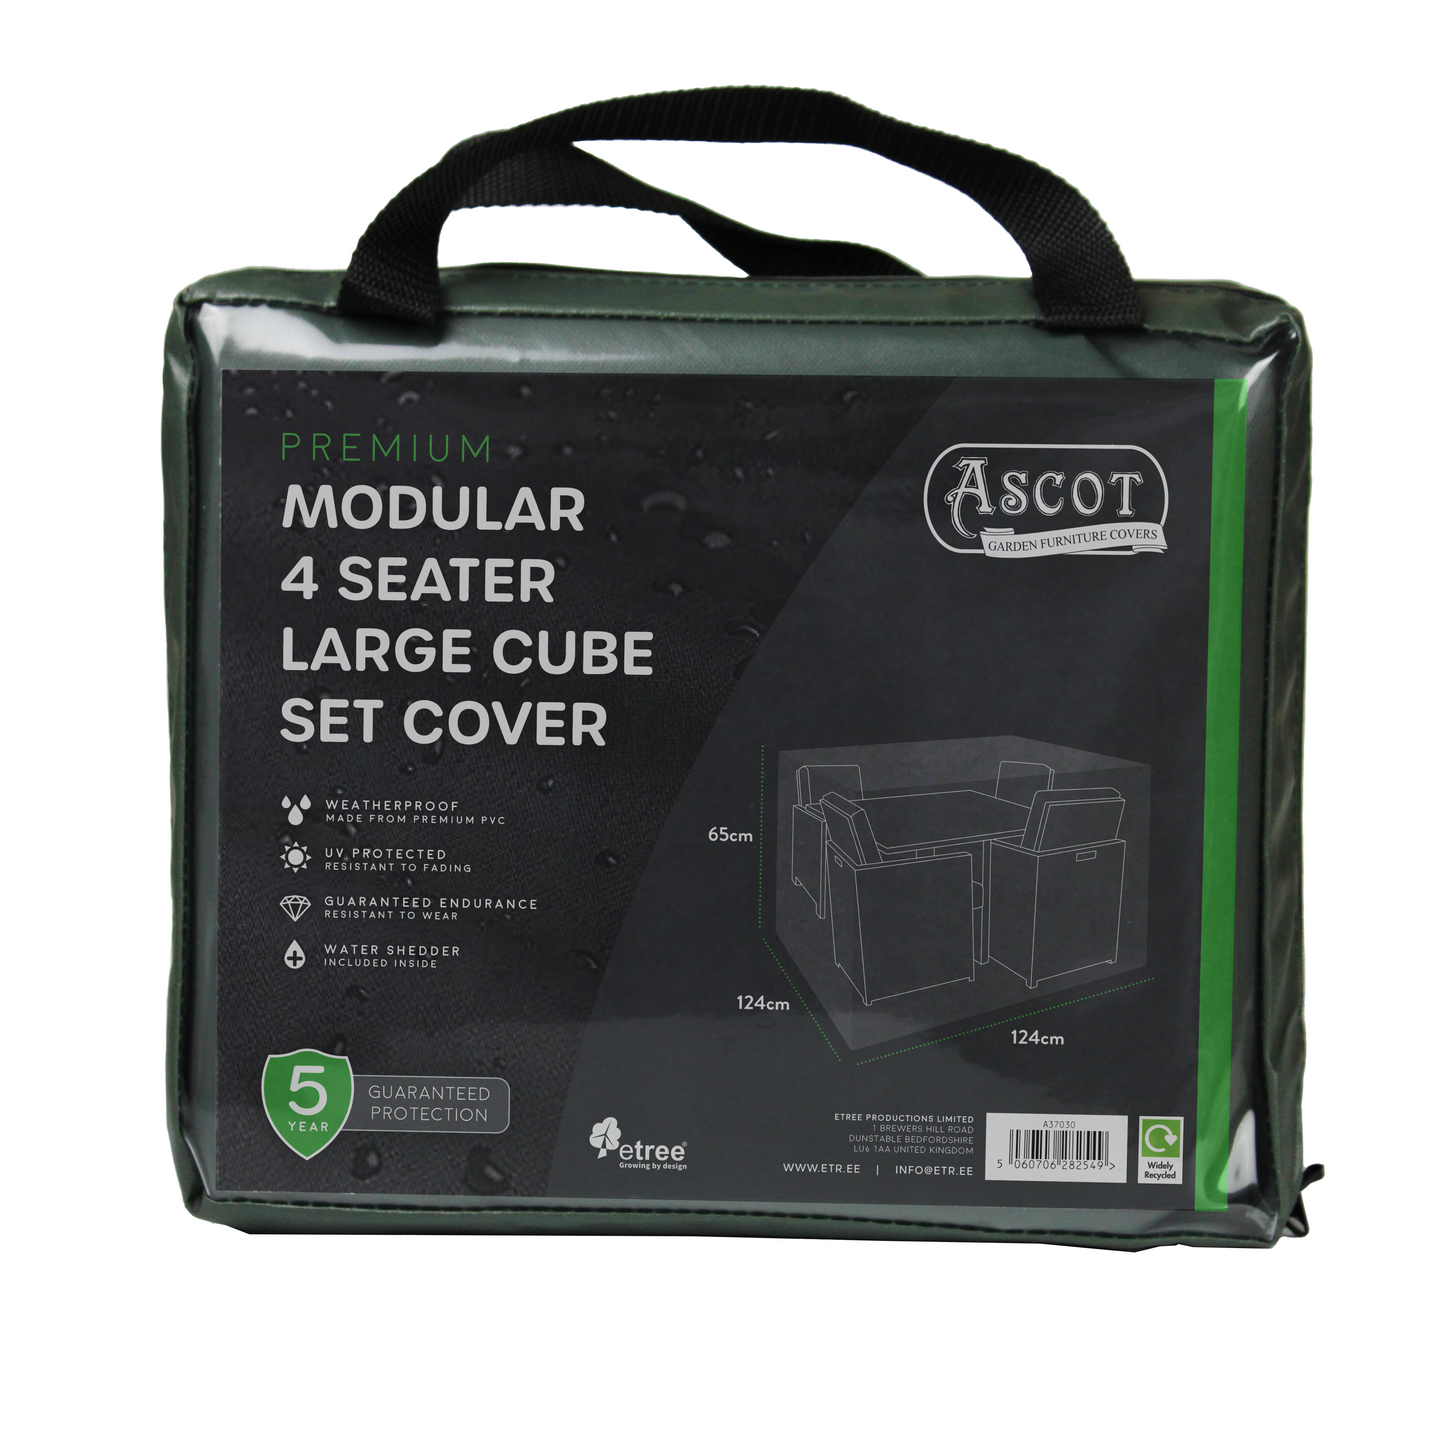 Premium Modular 4 Seater Cube Set Cover Large - 124 X 124 X 65 H